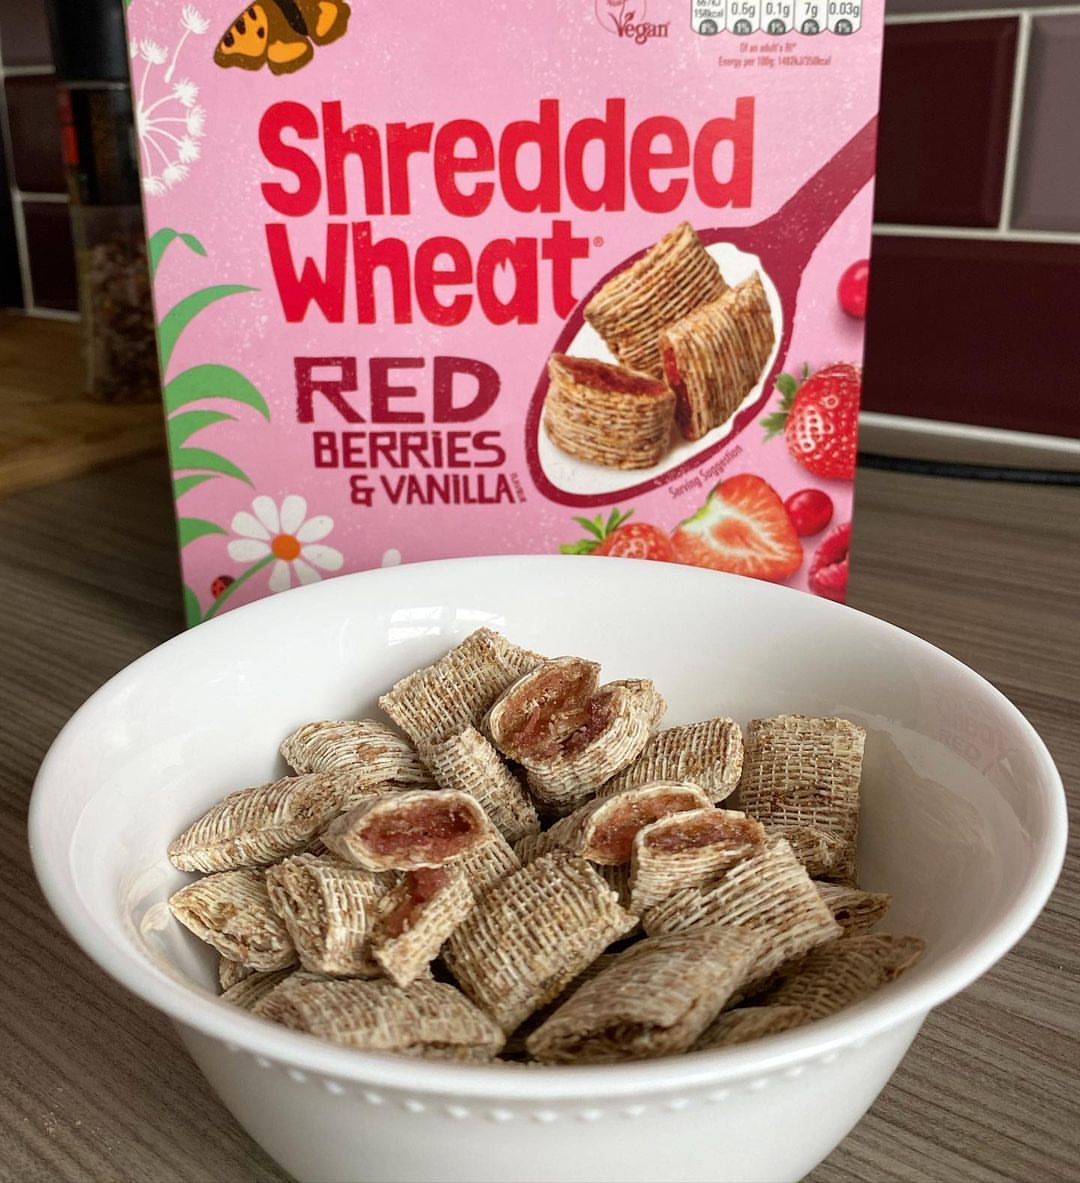 Can dogs eat Shredded Wheat? 🐶 - Petibble